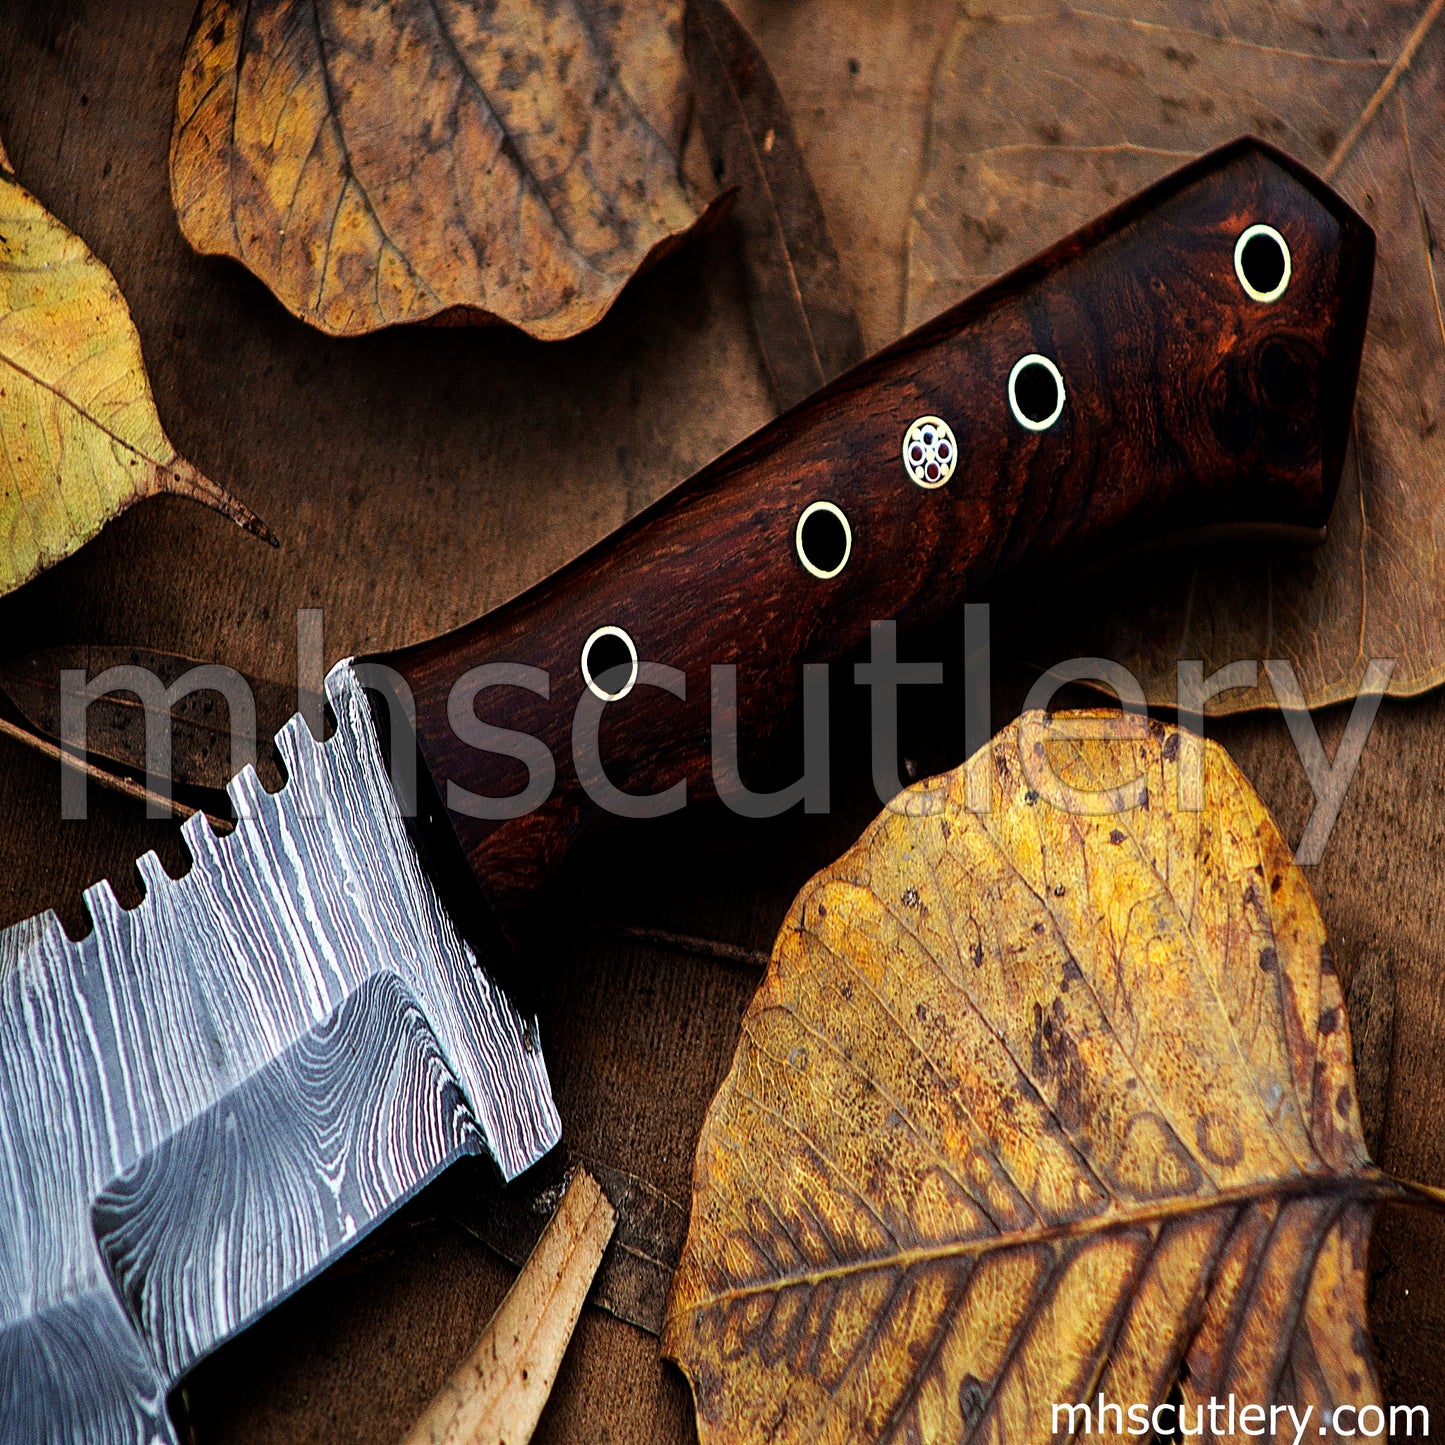 Handmade Damascus Steel Tactical Bushcraft Tracker Knife | mhscutlery